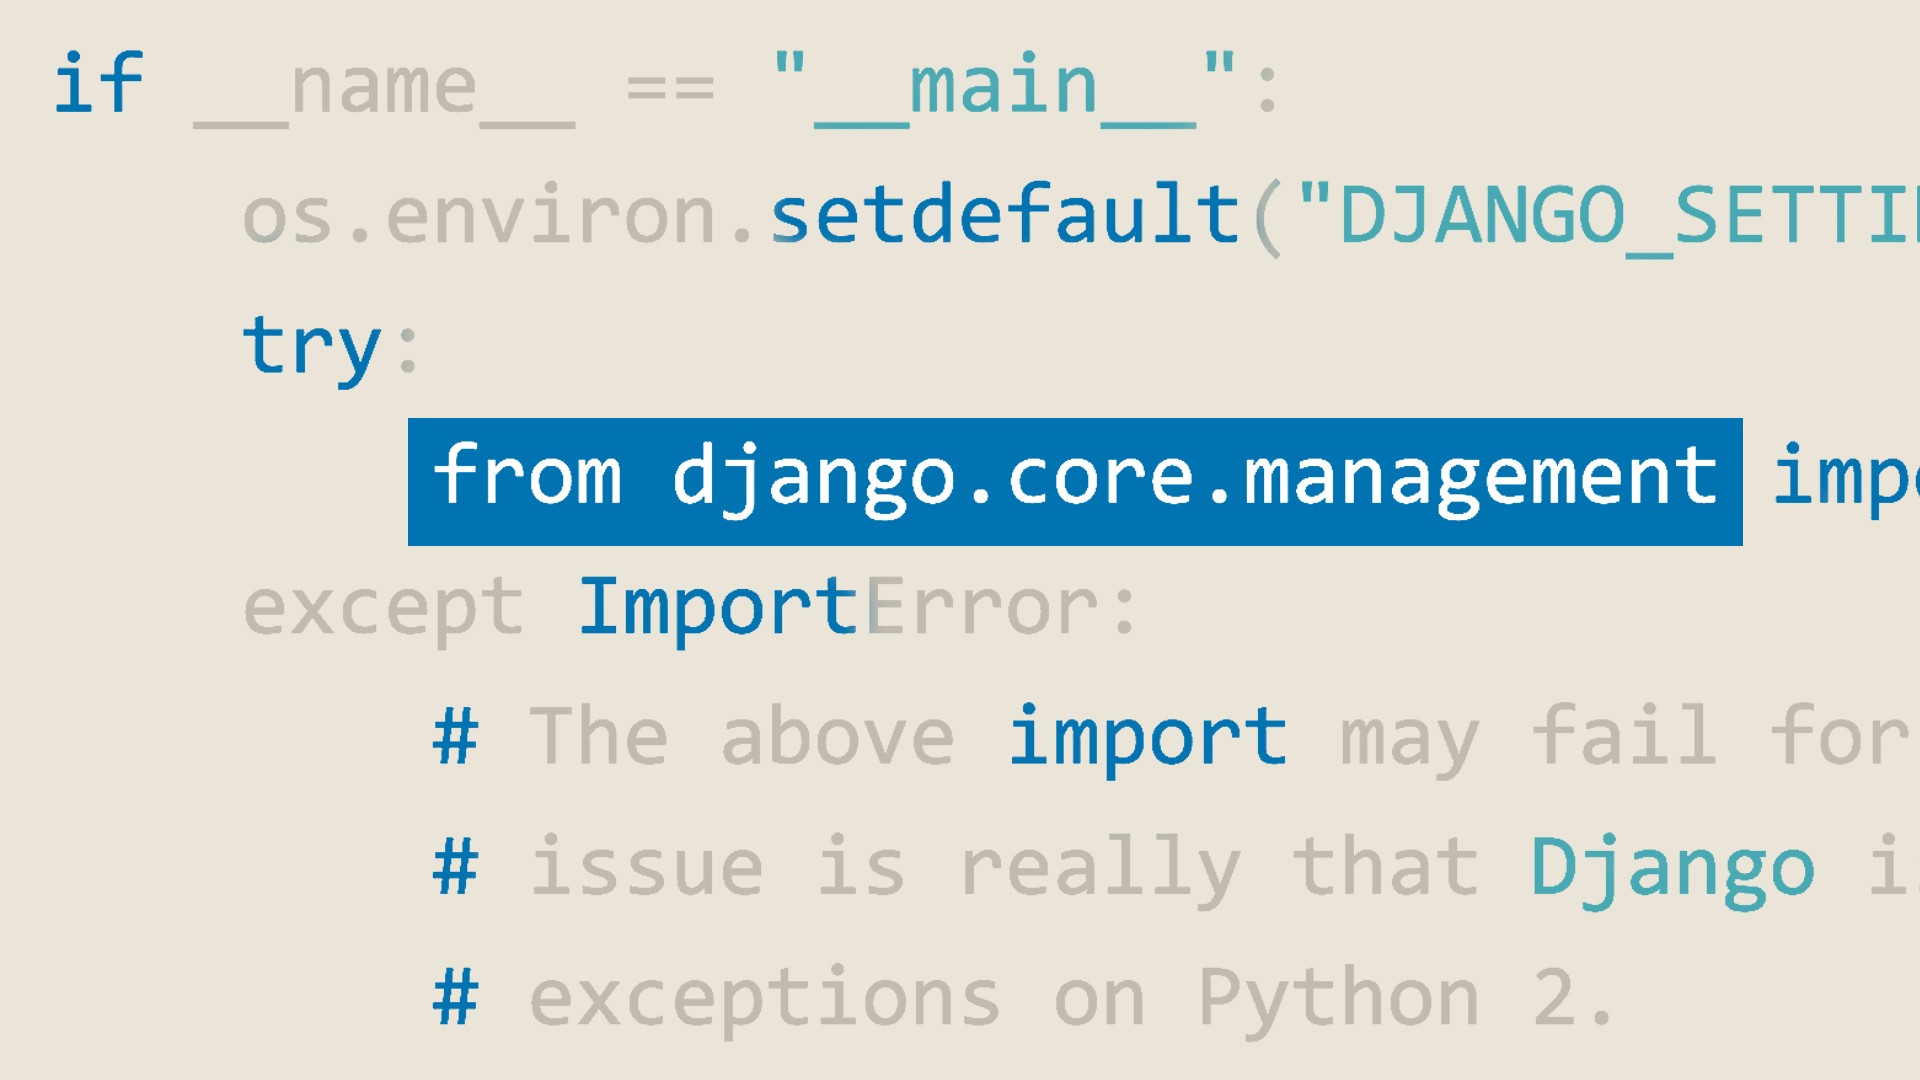 Advanced Web Development with Django